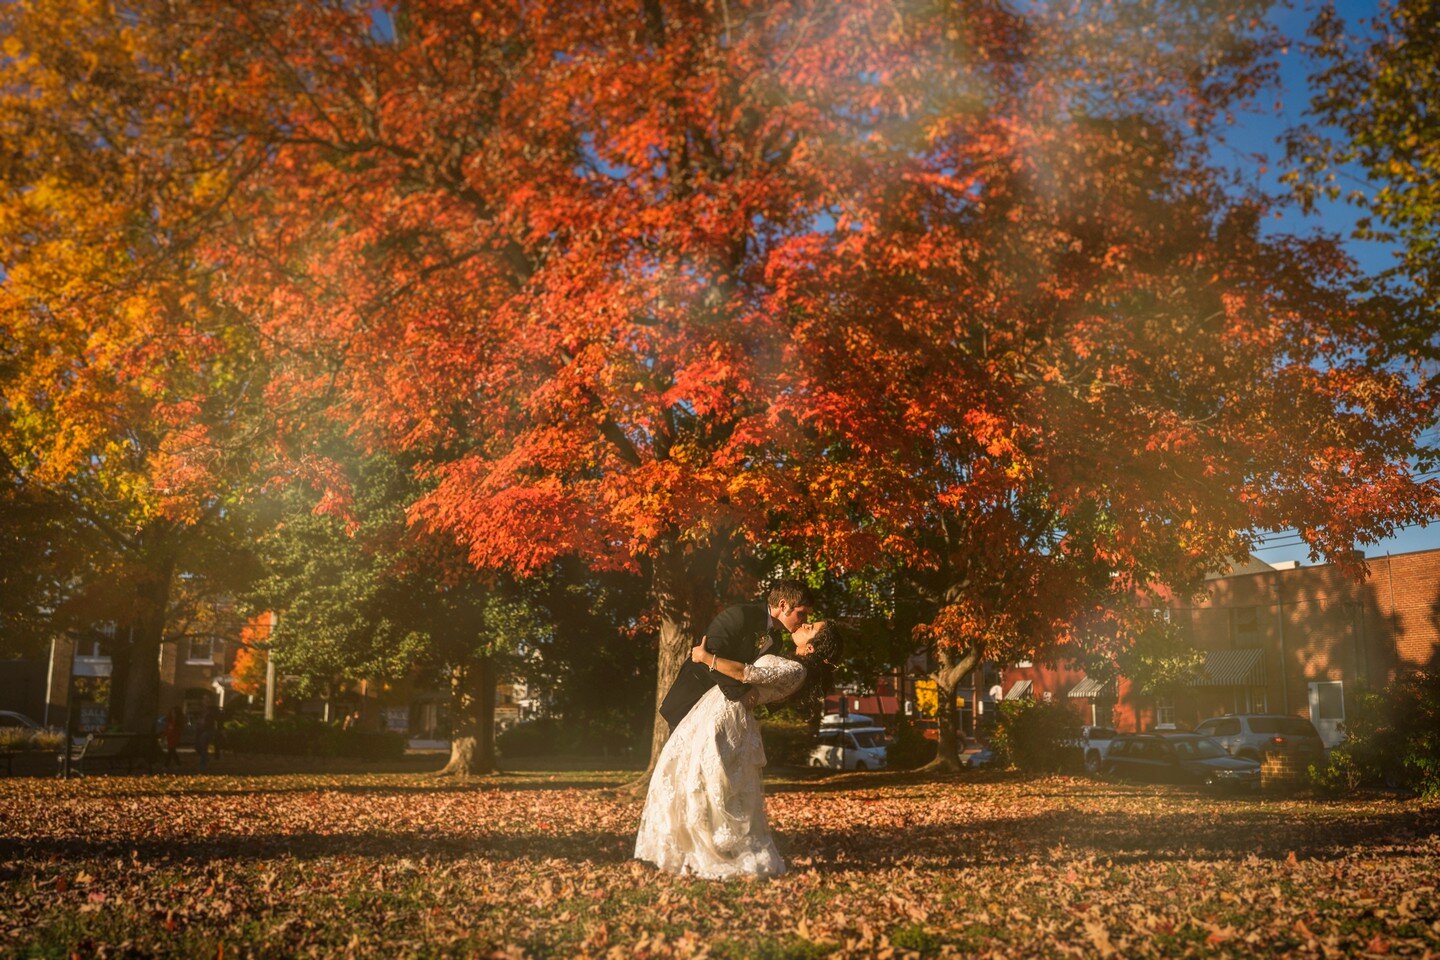 A small wedding in Fredericksburg.
Not many activities but full of loves and cares. It was a perfect time to get the fall foliage.

#weddingphoto #virginiawedding #dmvwedding #fallwedding #restaurantwedding #weddingcake #brideandgroom